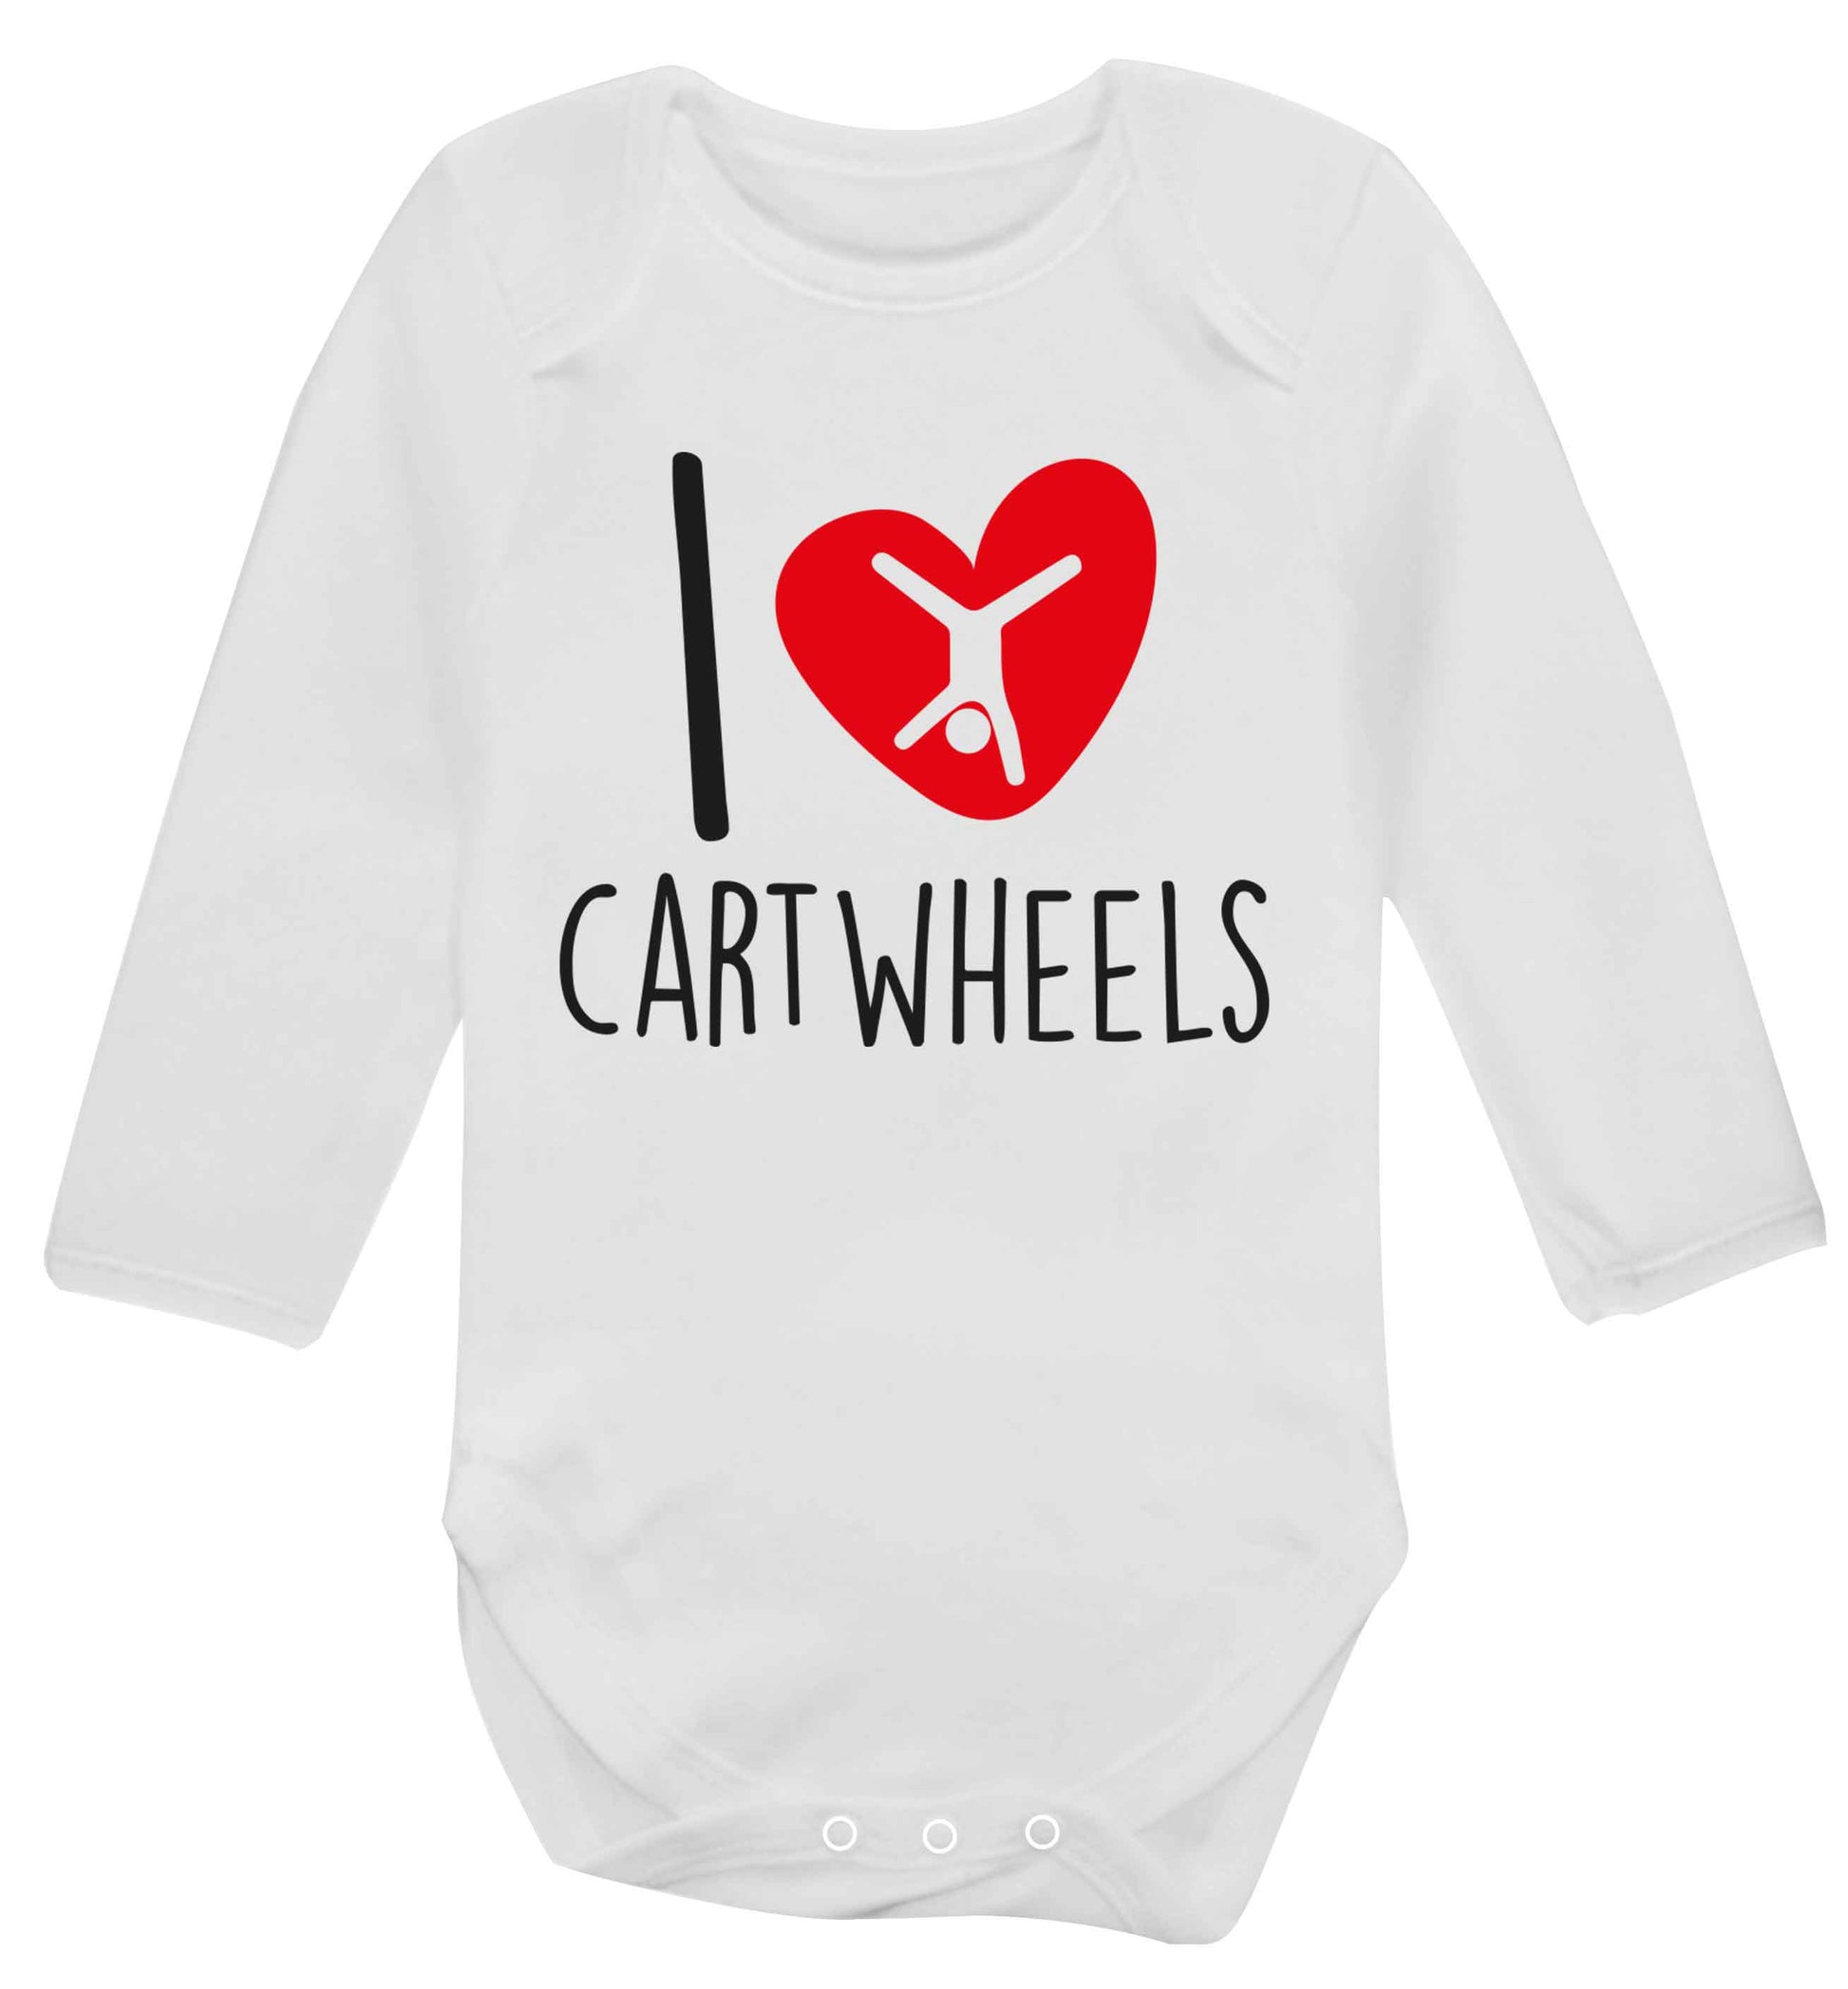 I love cartwheels Baby Vest long sleeved white 6-12 months